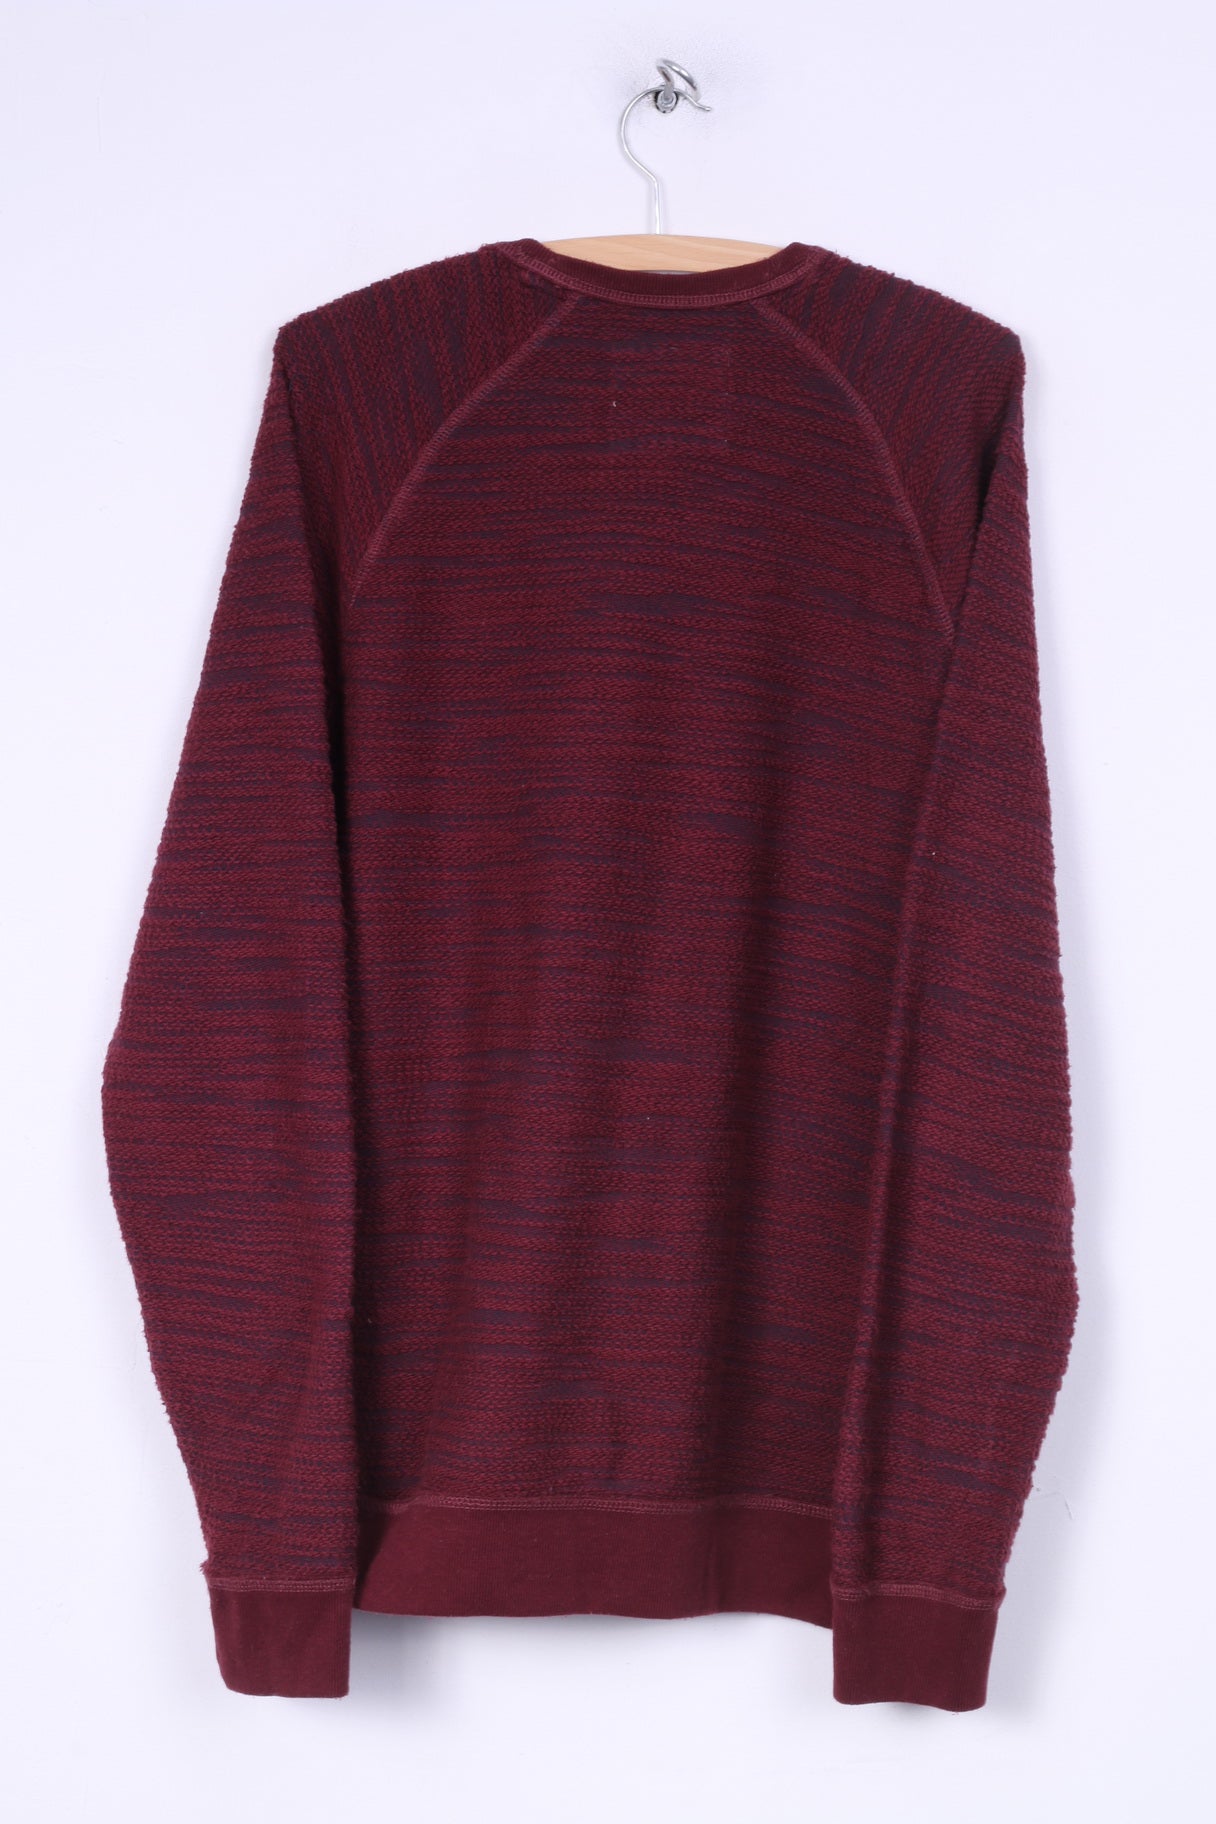 hollister burgundy sweater